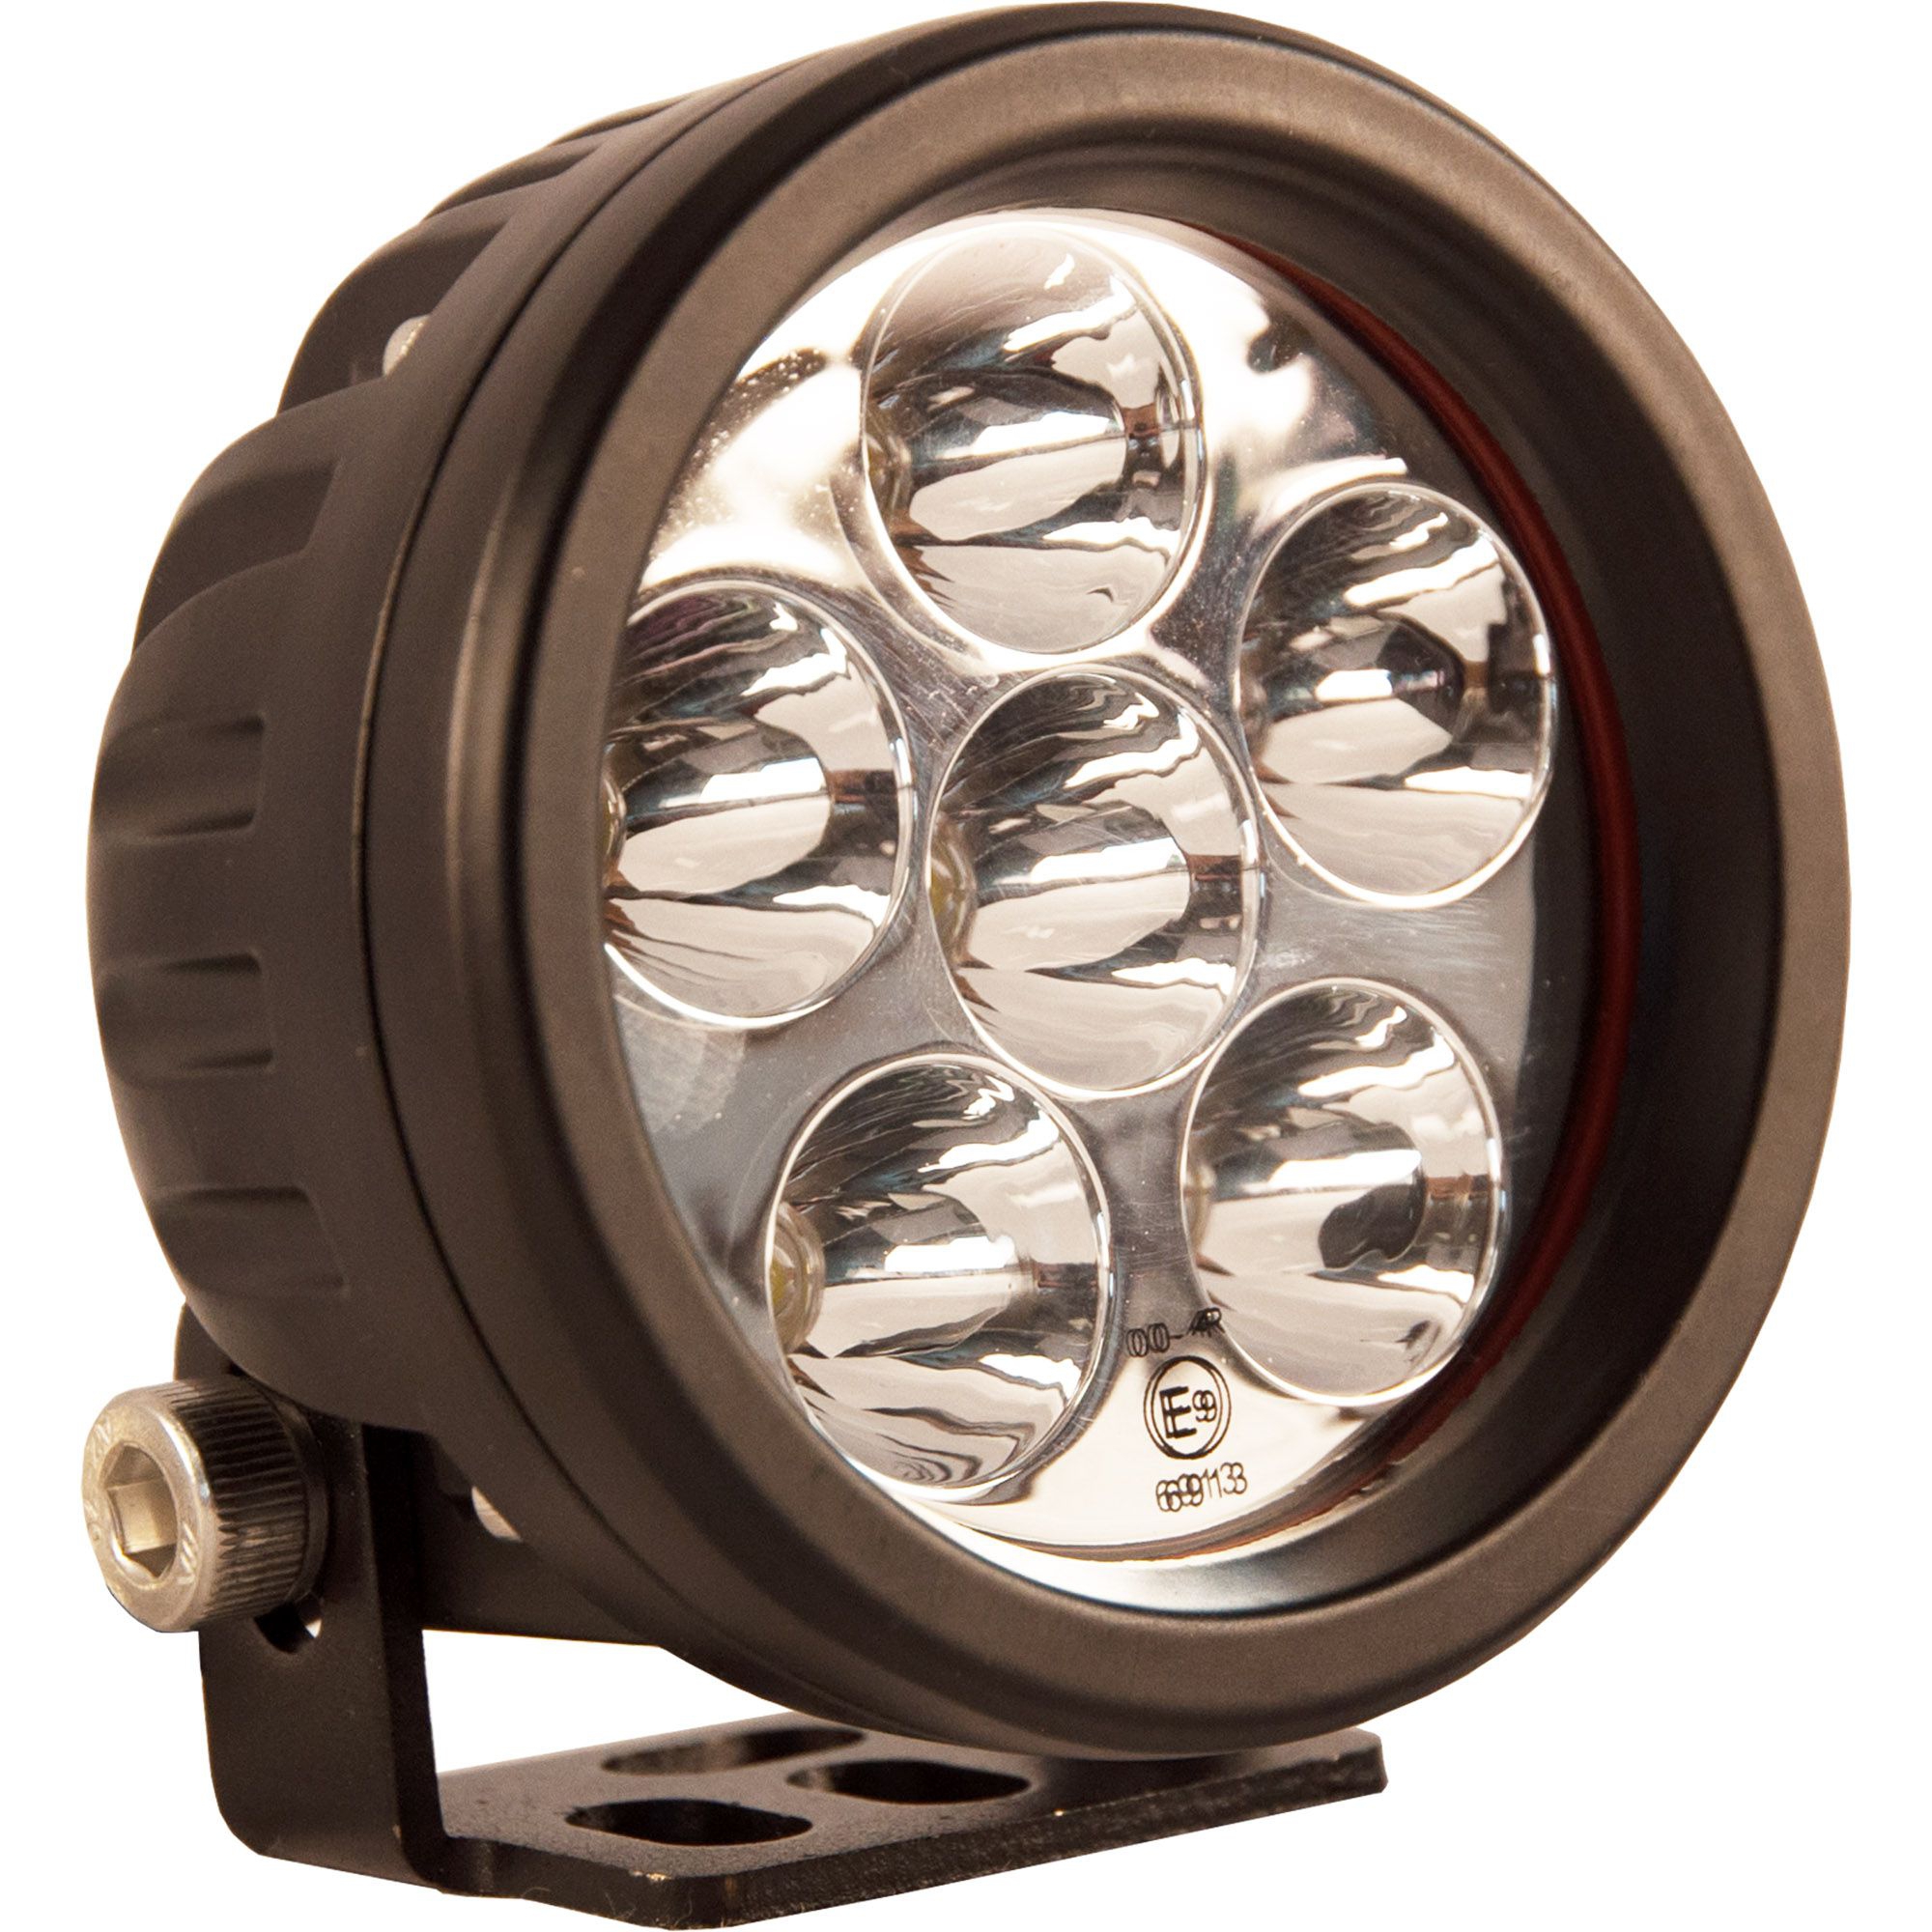 LED-Arbeitsscheinwerfer, 10-30 V, 1440 lm